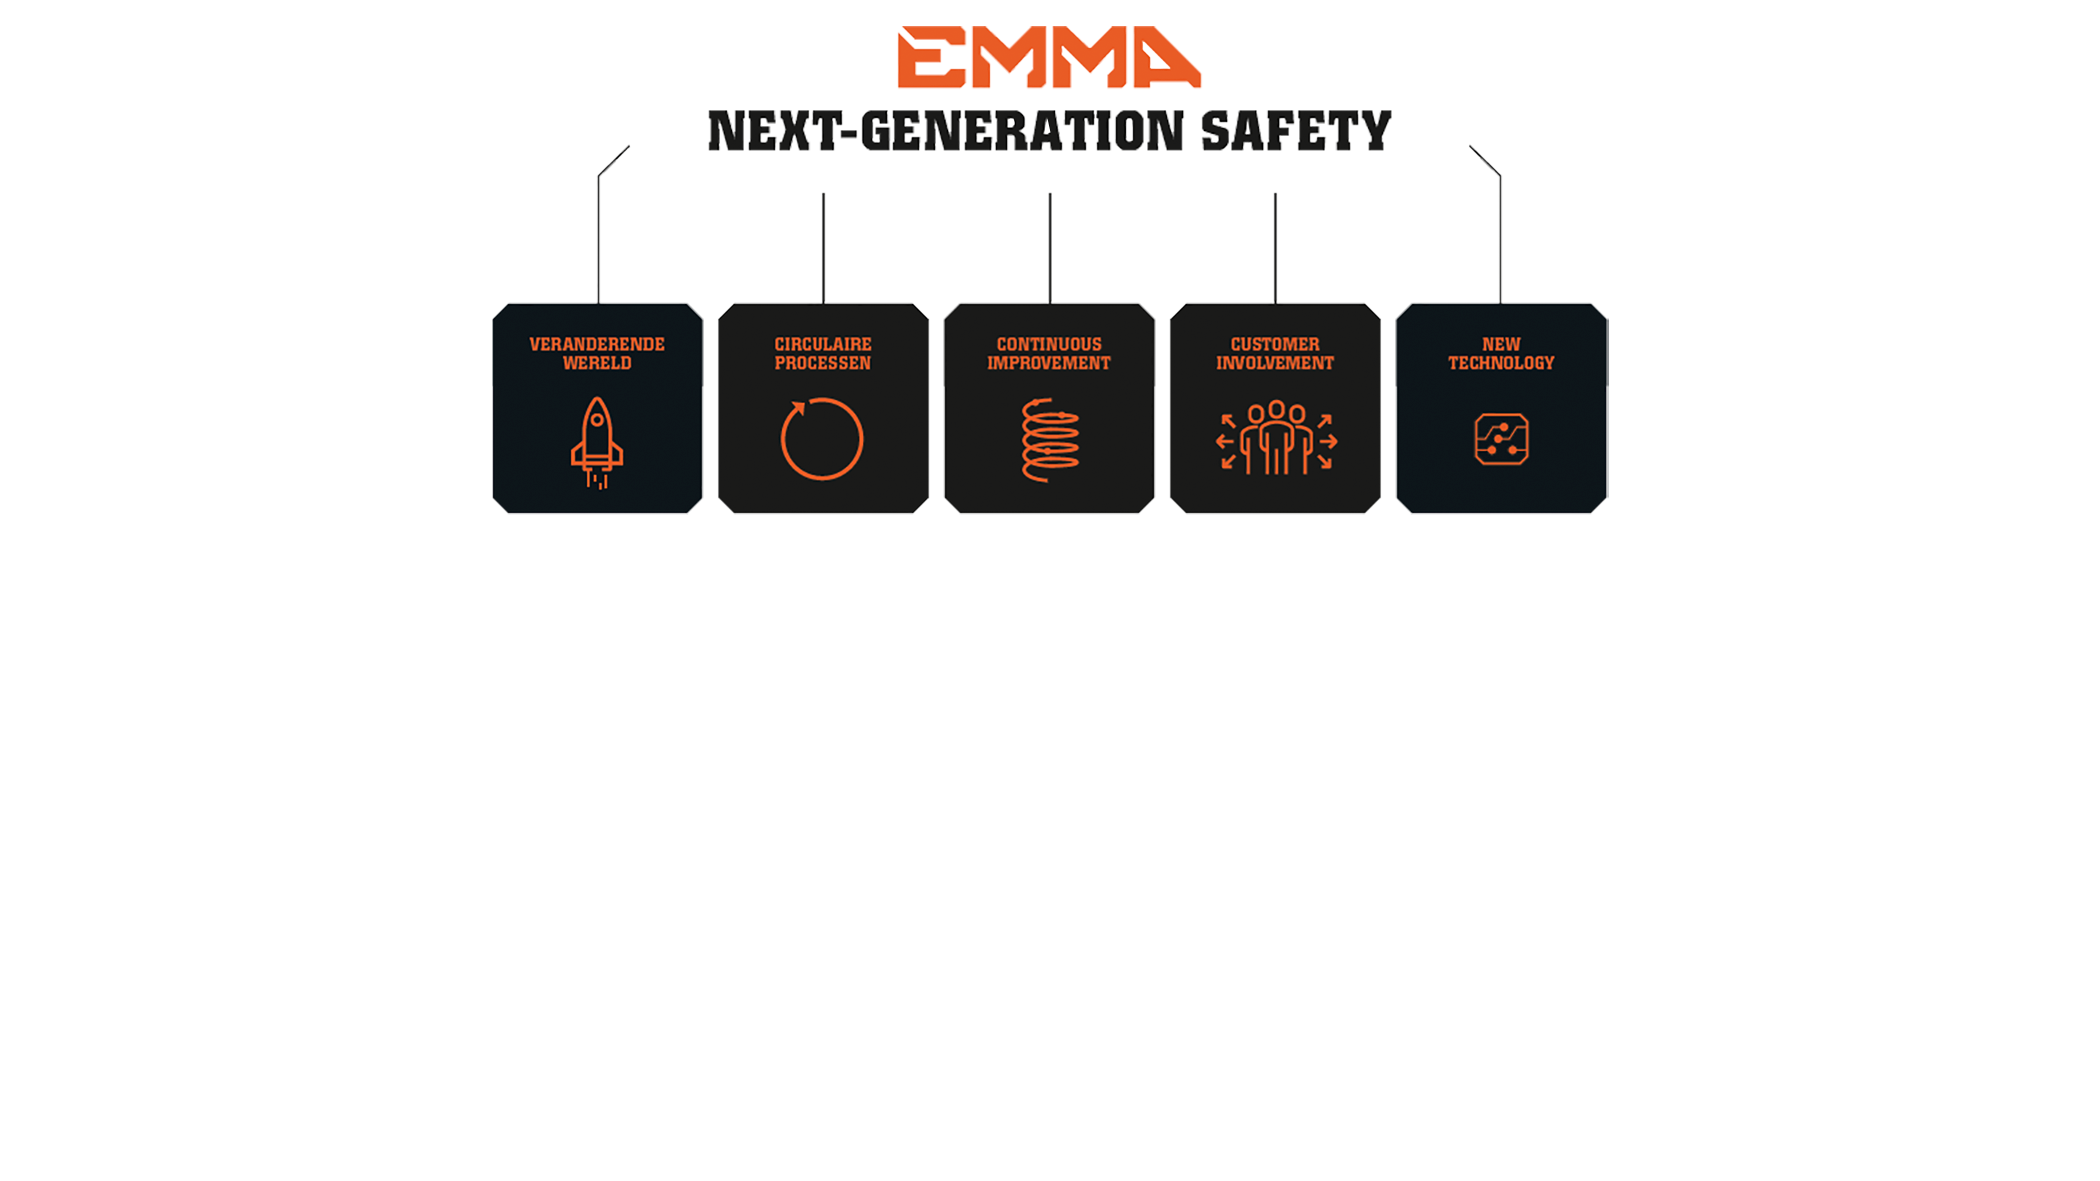 EMMA Next Generation Safety